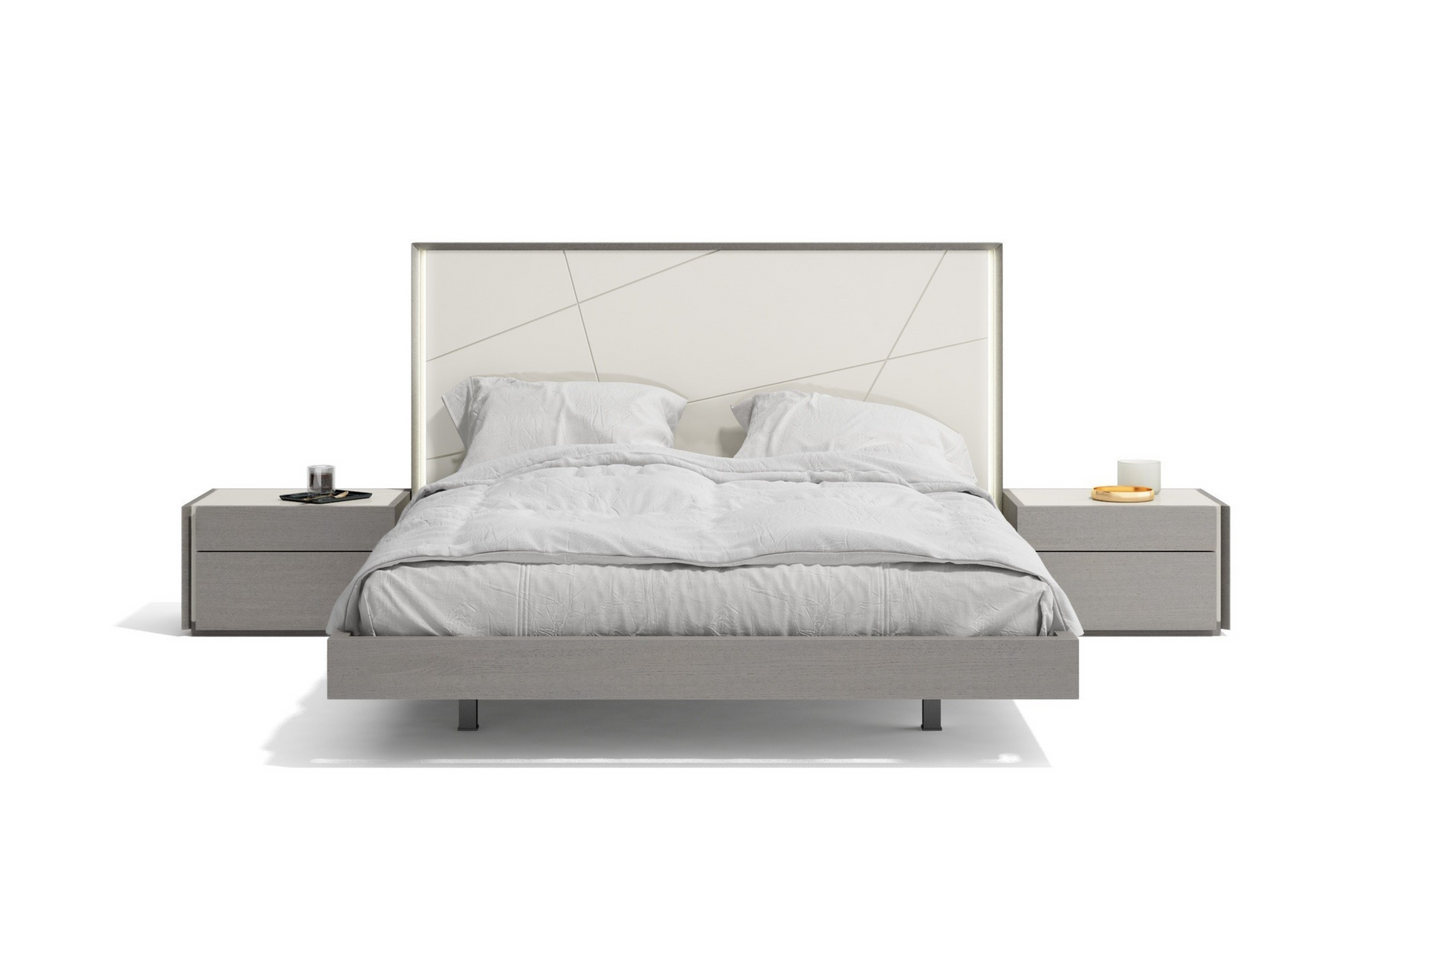 Sintra Premium Bedroom Bed in Grey SKU:17554